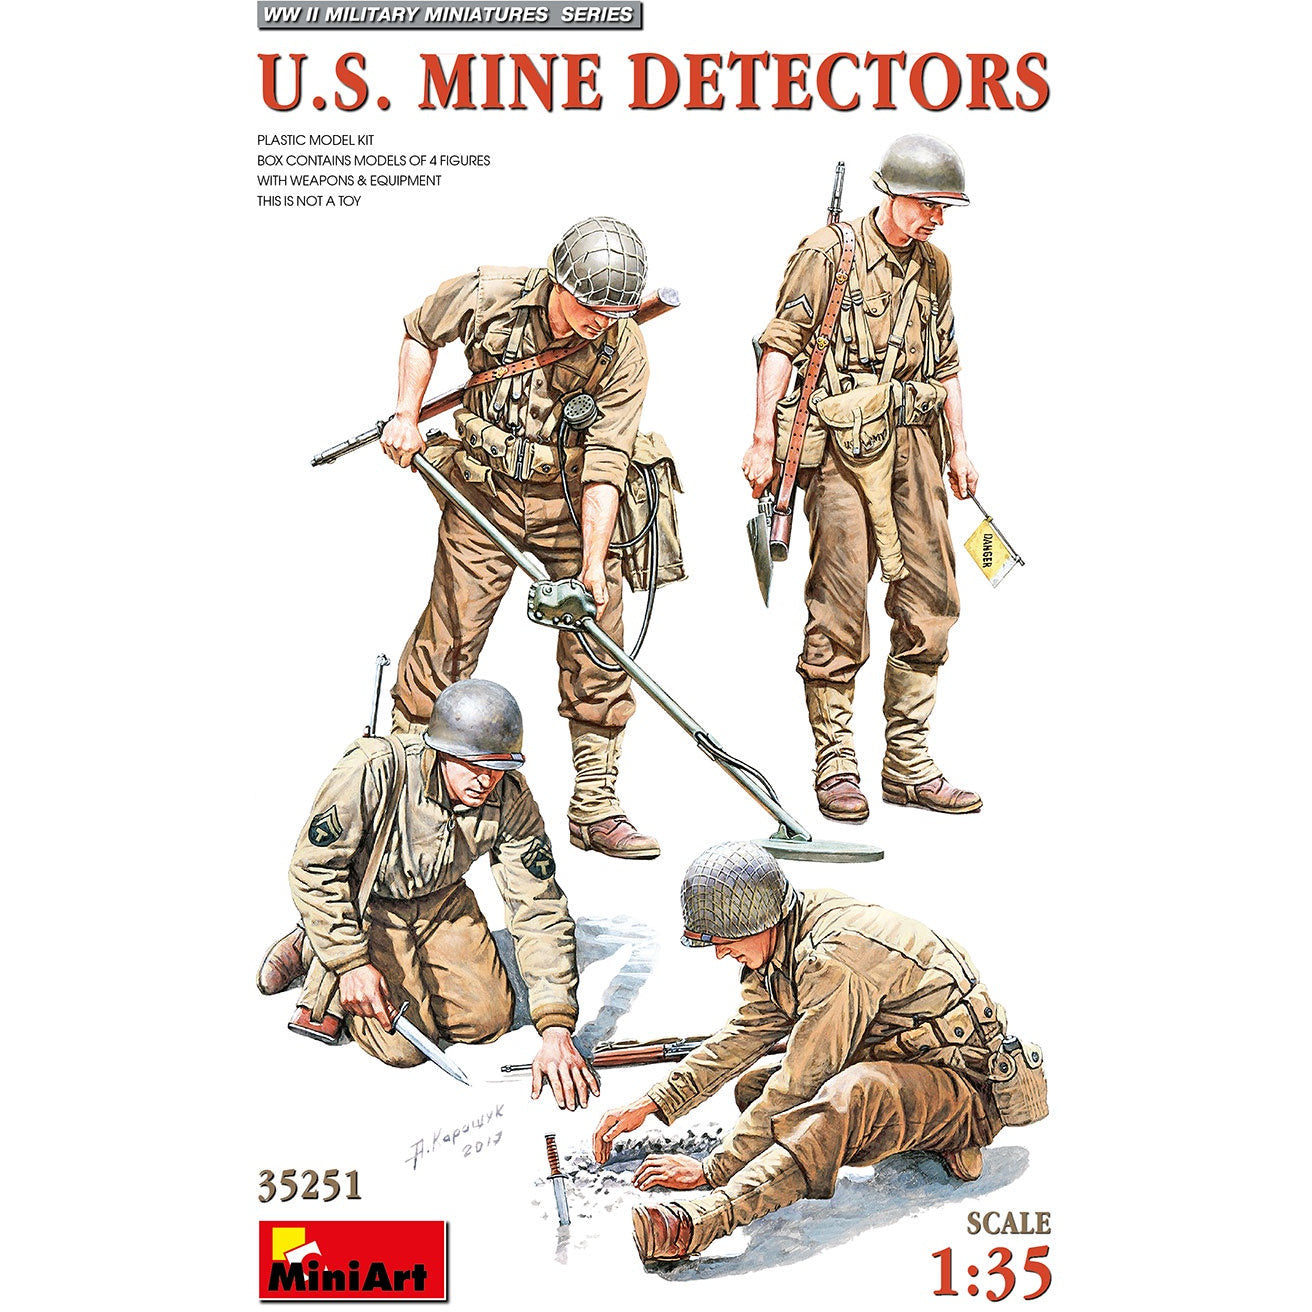 U.S. Mine Detectors #35251 1/35 Figure Kit by MiniArt